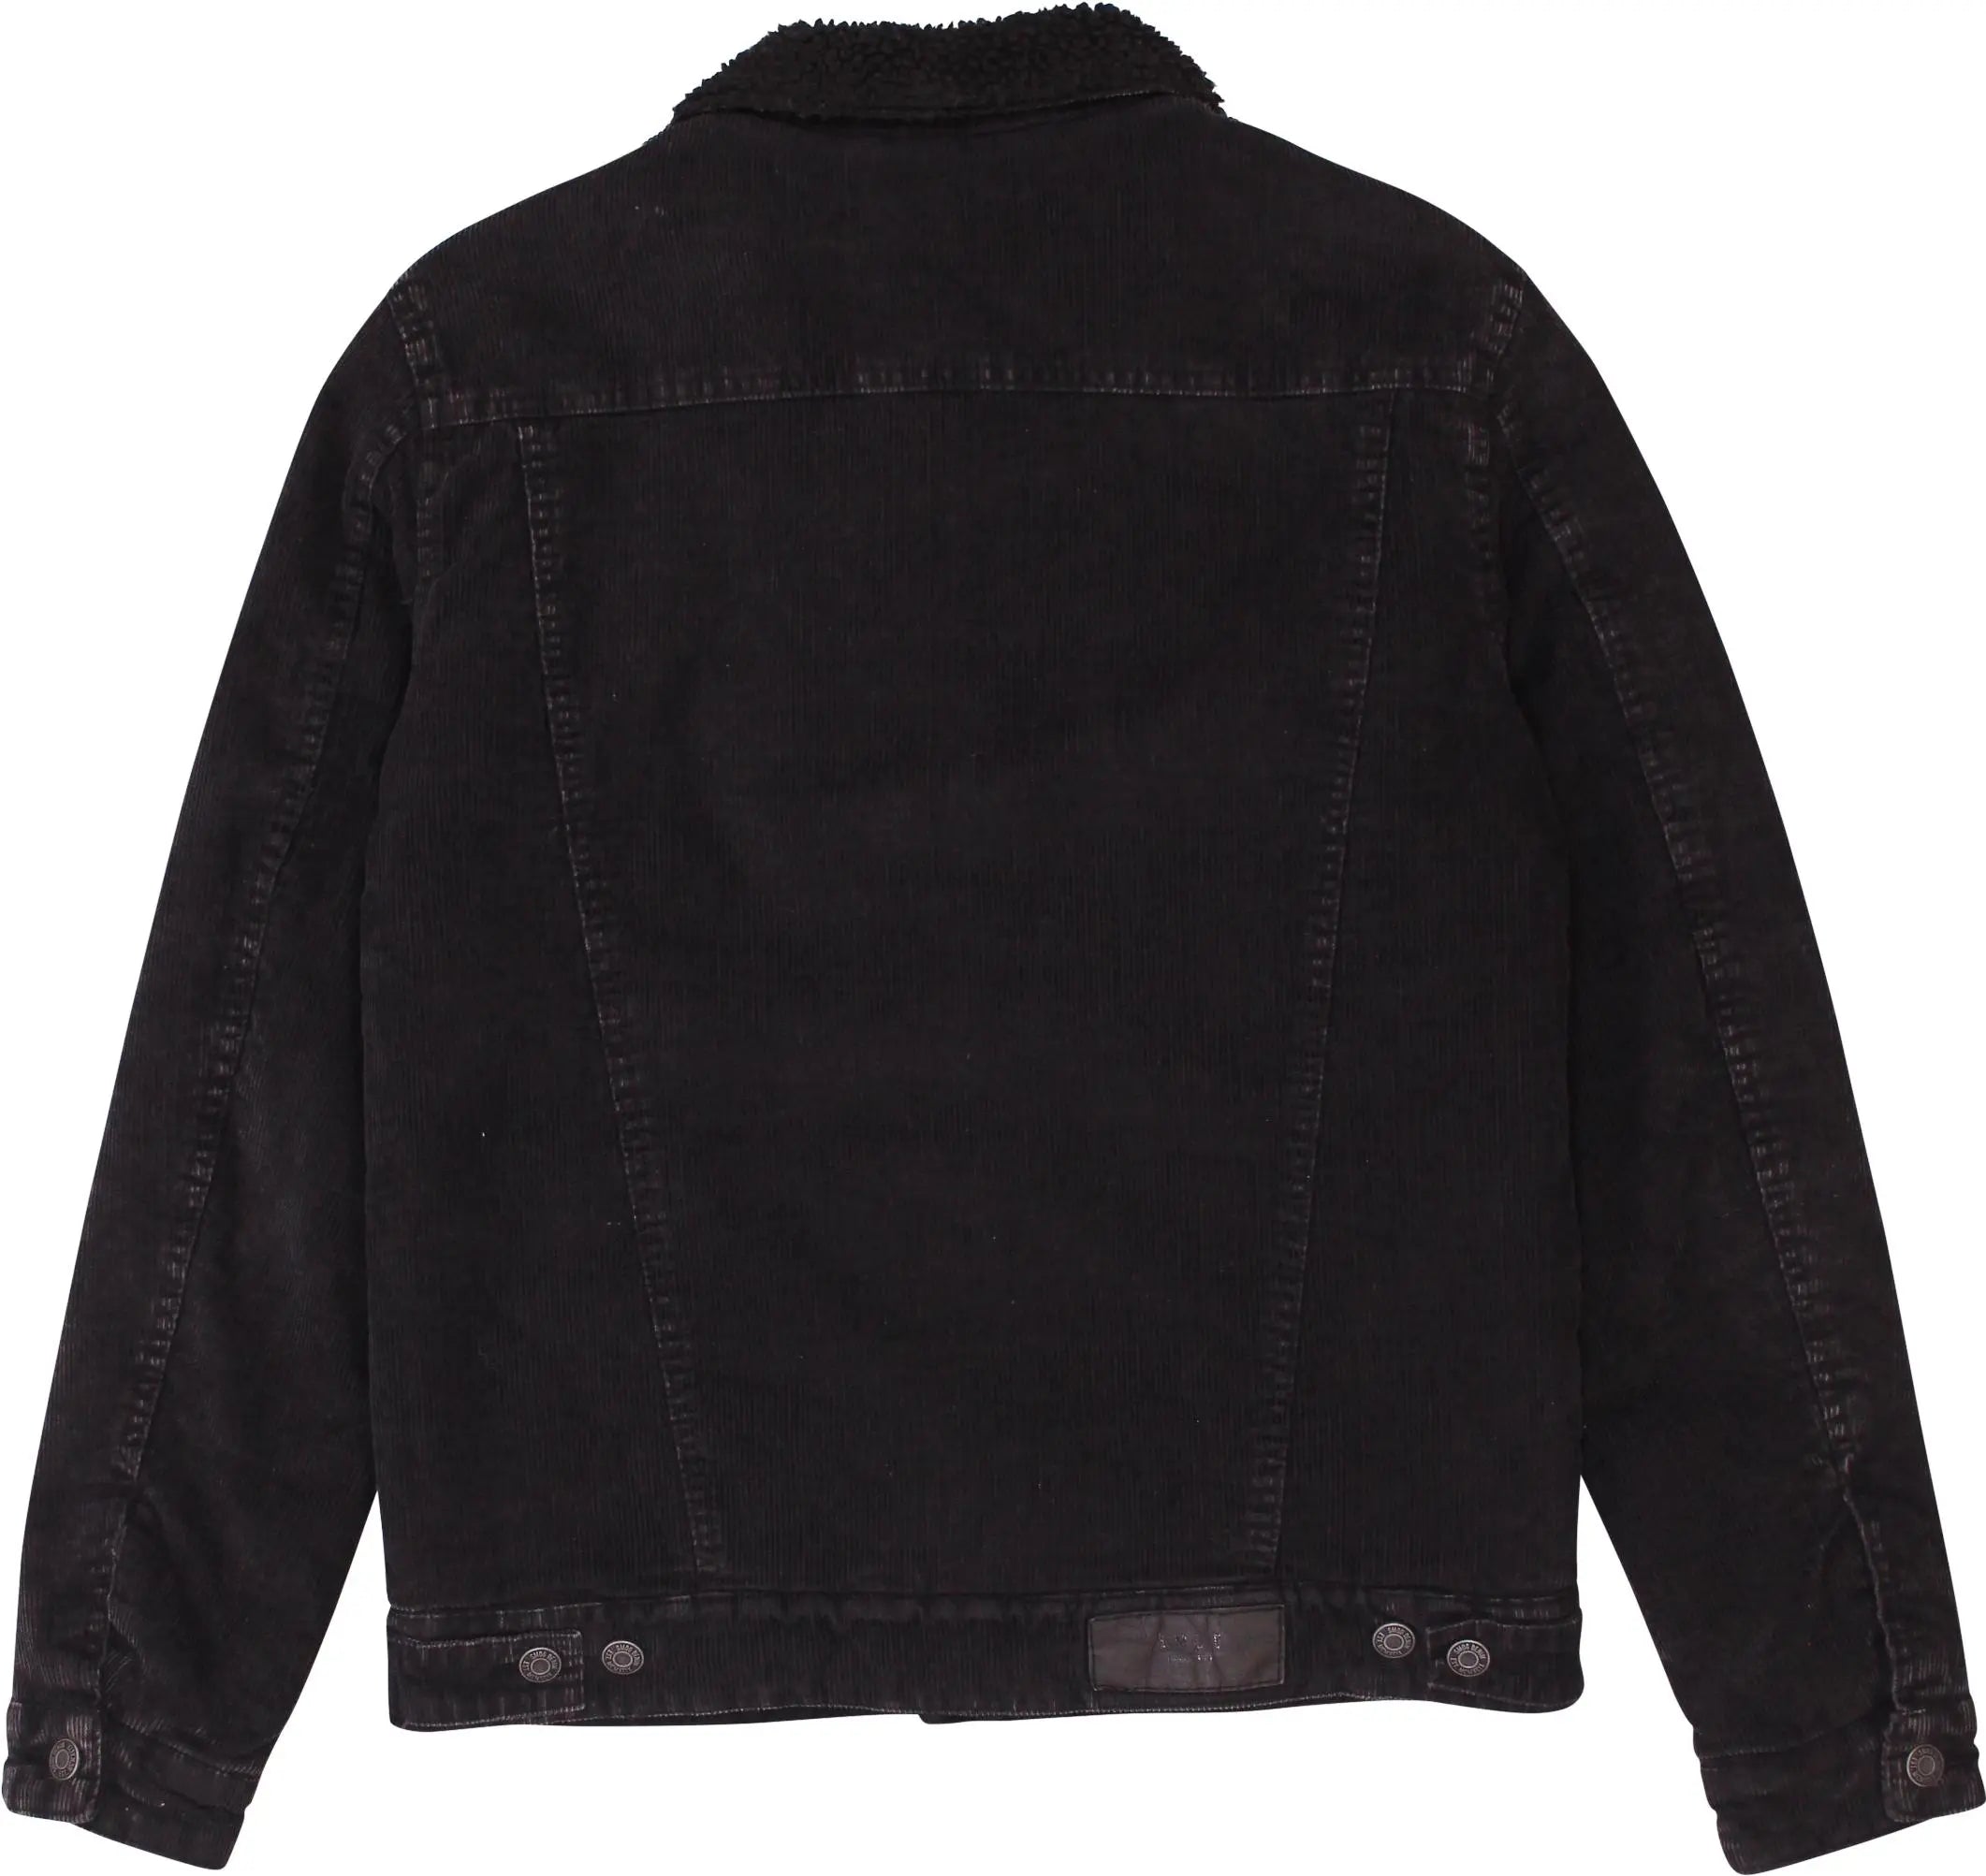 Smog - Black Corduroy Jacket by Smog Denim- ThriftTale.com - Vintage and second handclothing